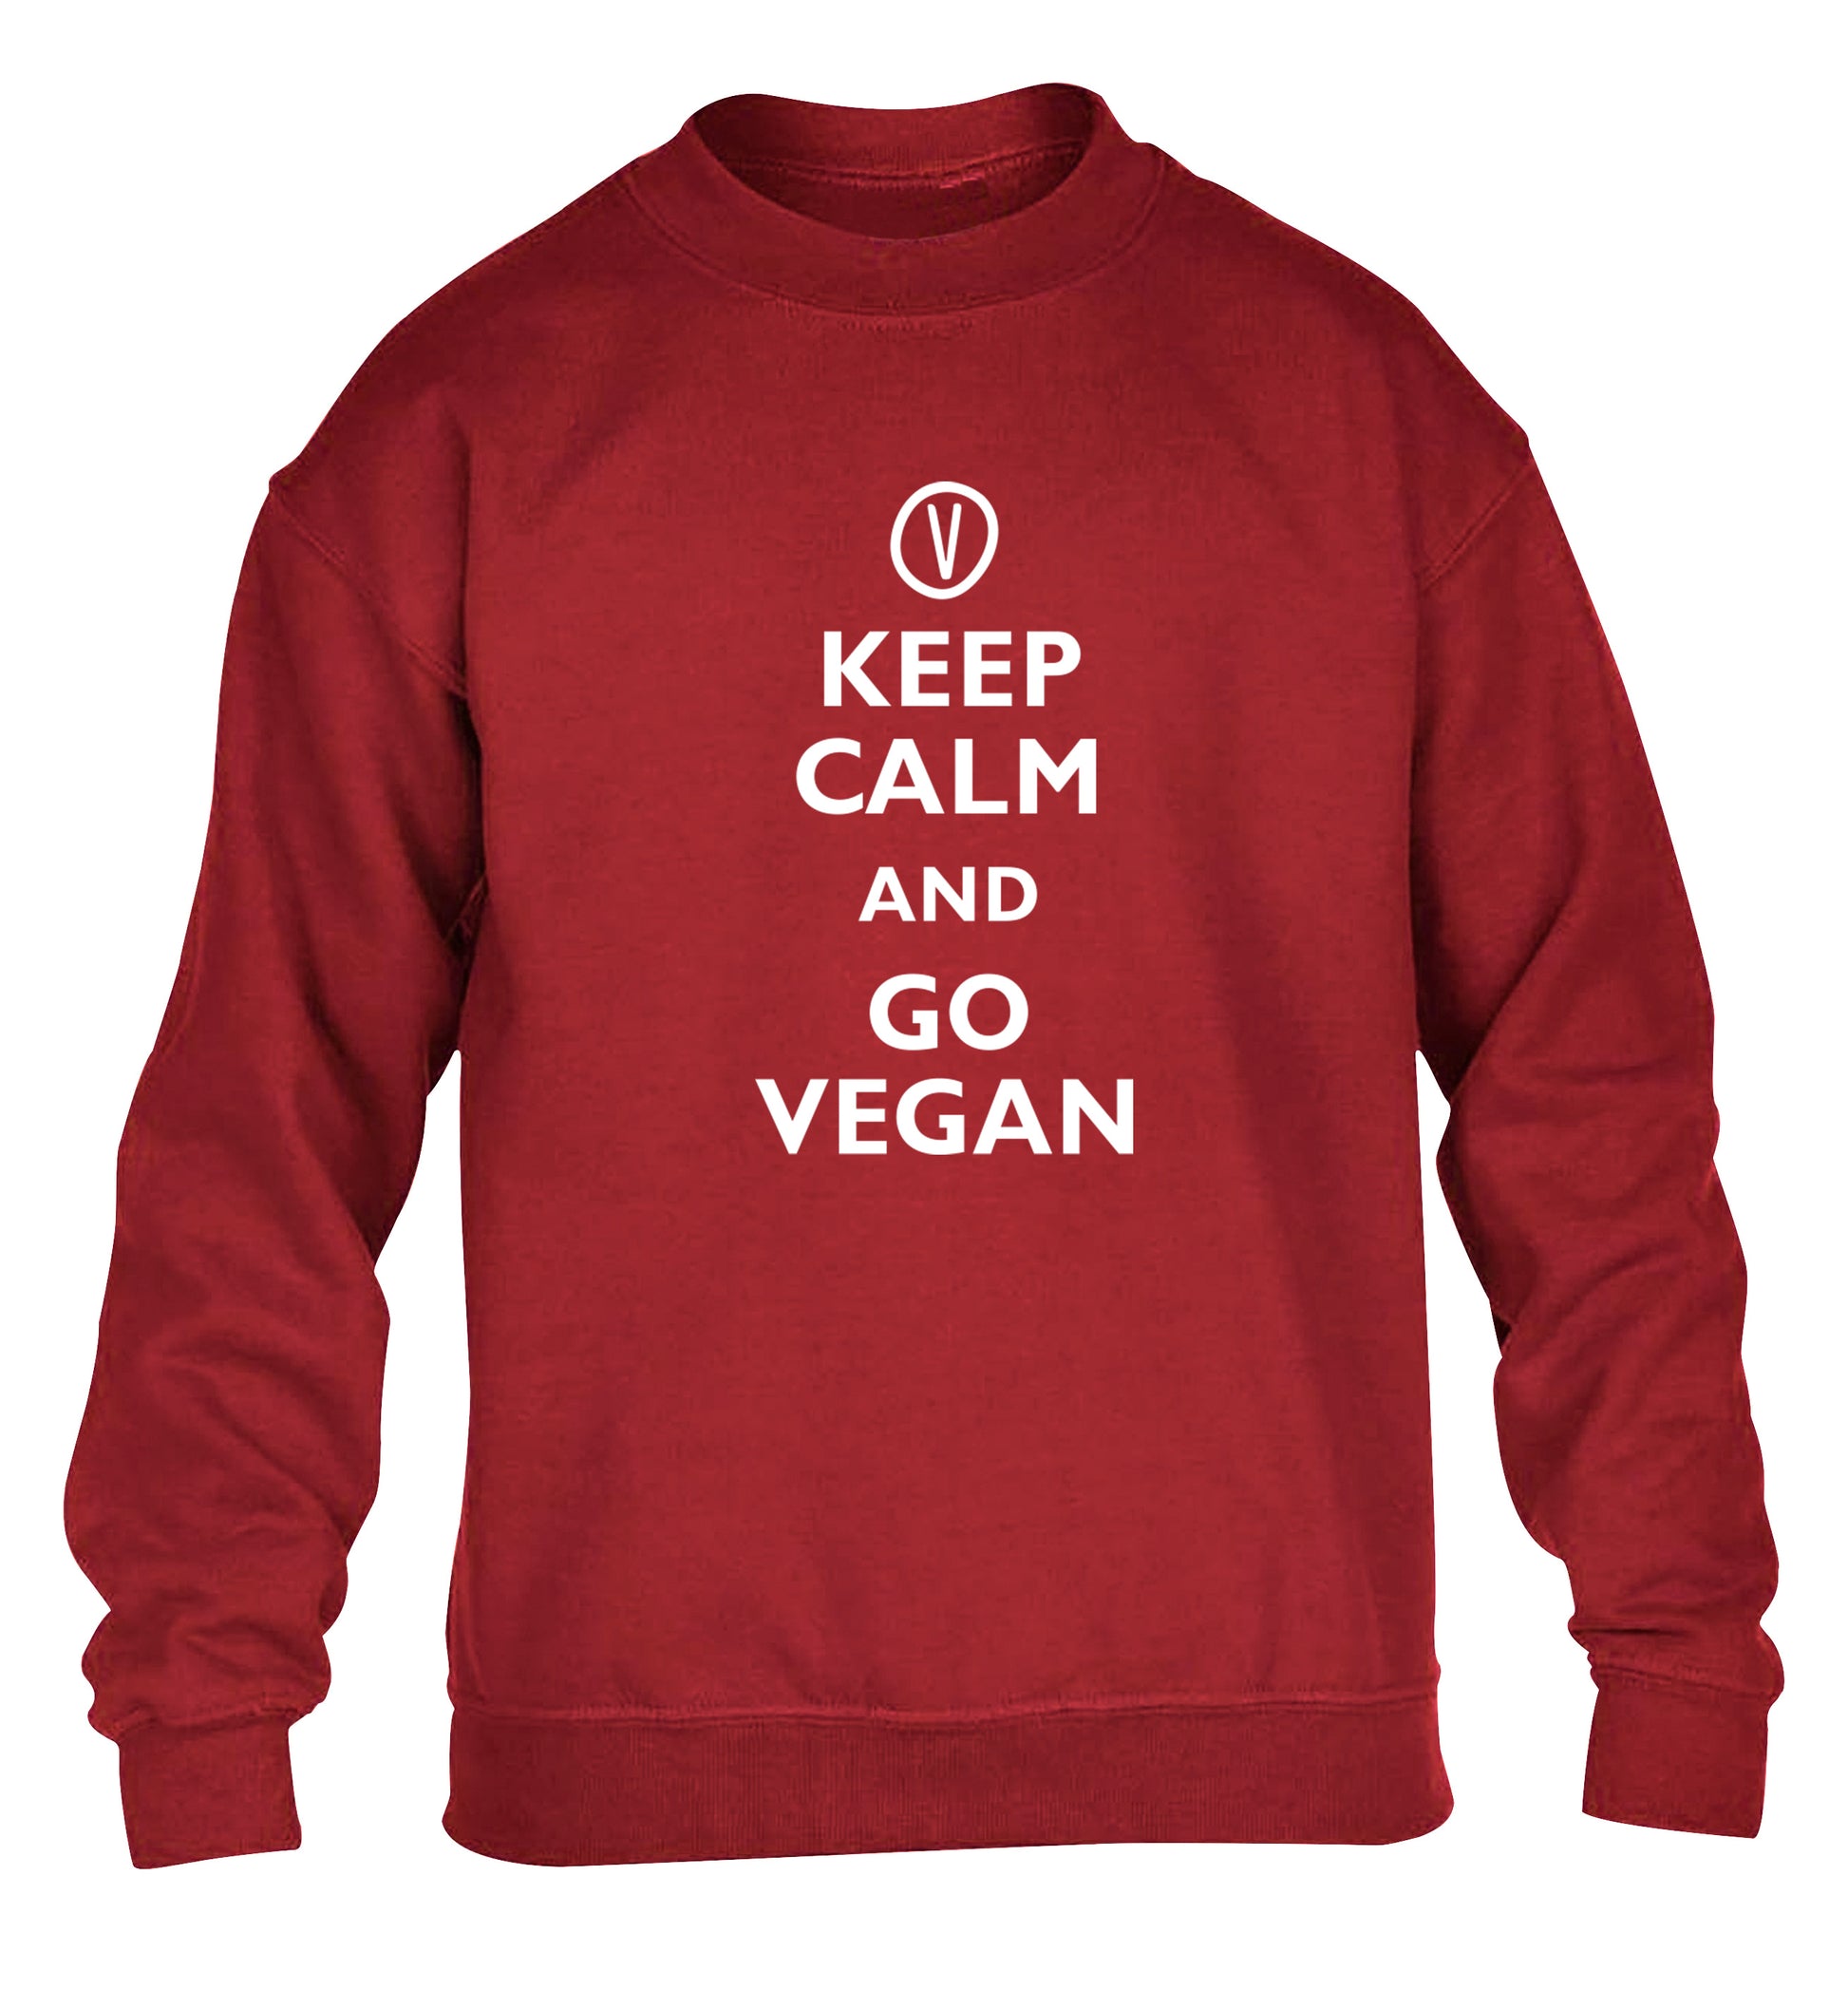 Keep calm and go vegan children's grey sweater 12-13 Years